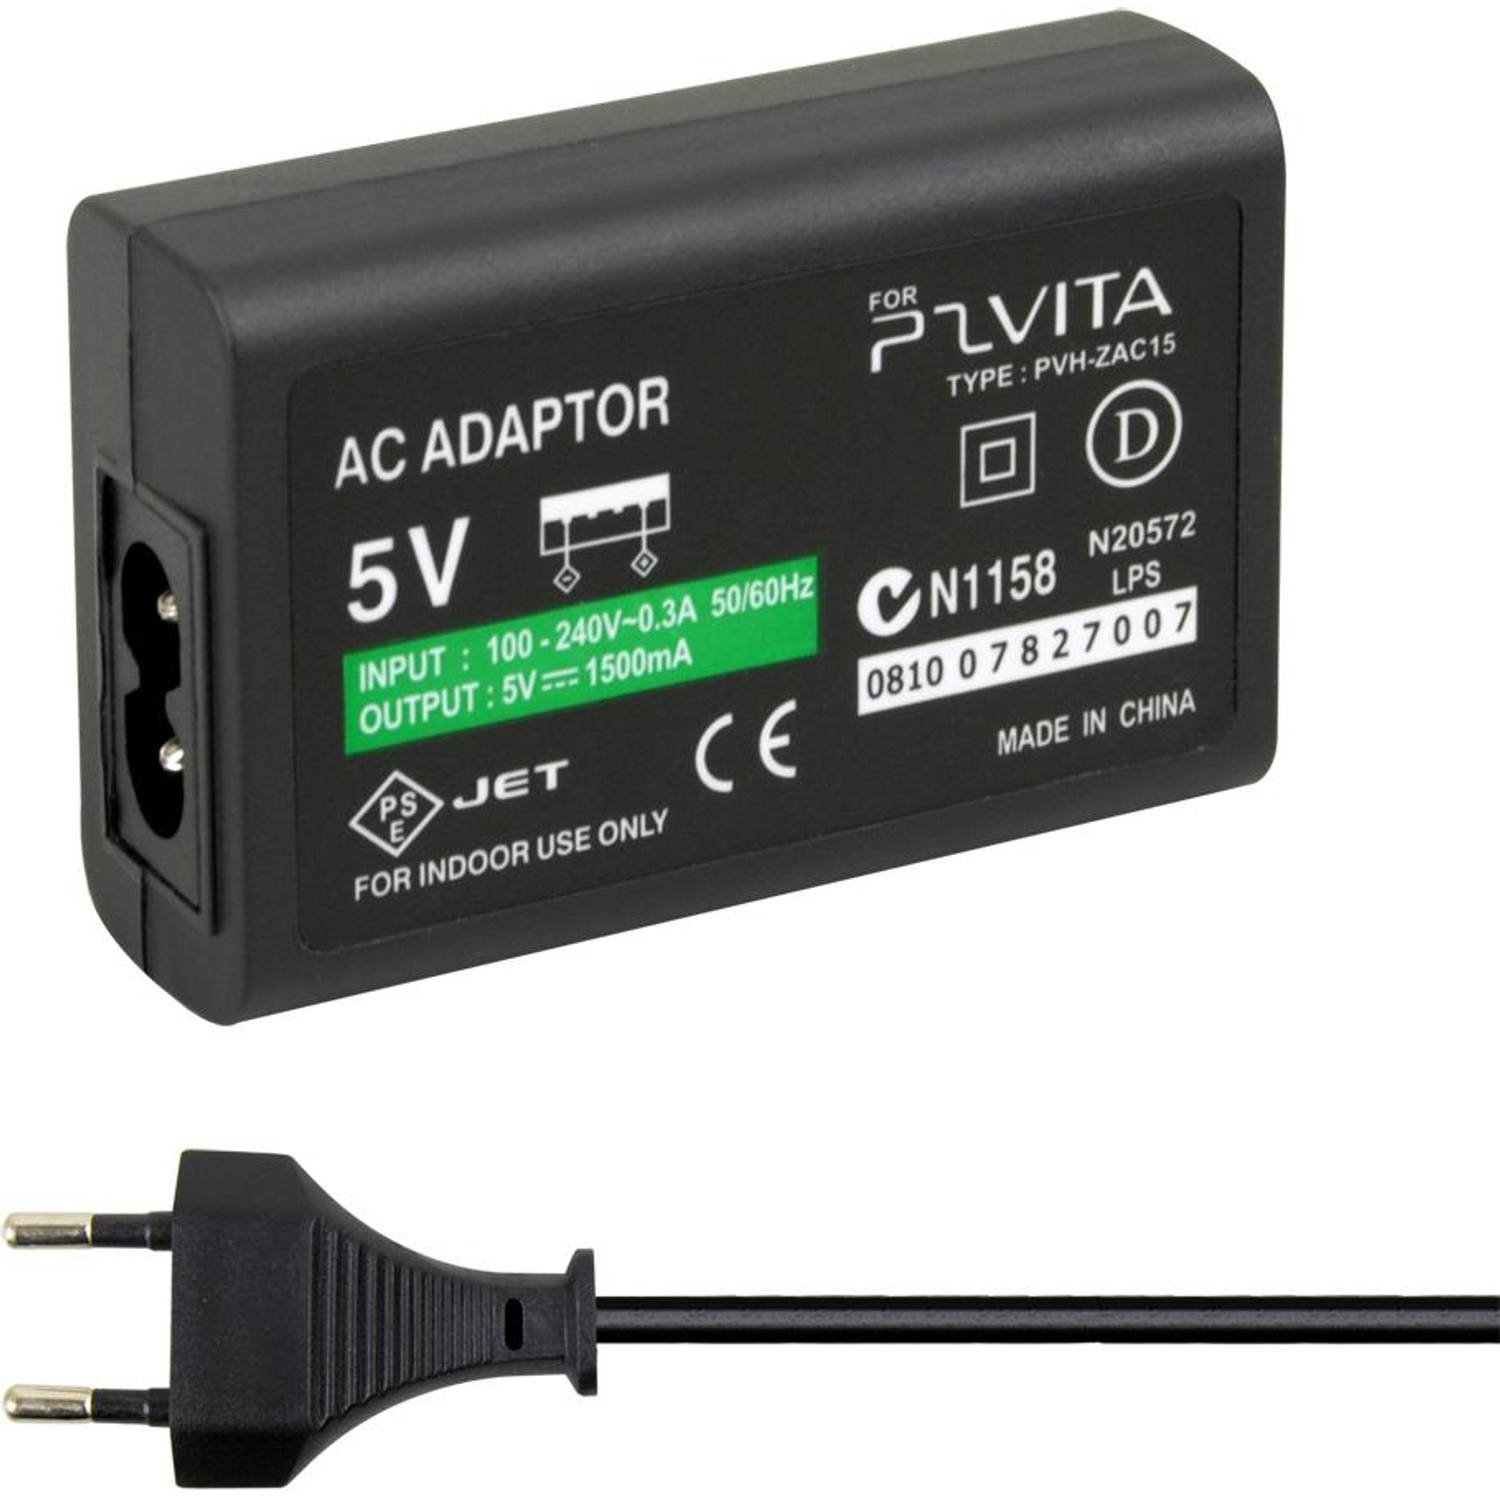 AC Adapter voor Sony PlayStation Vita